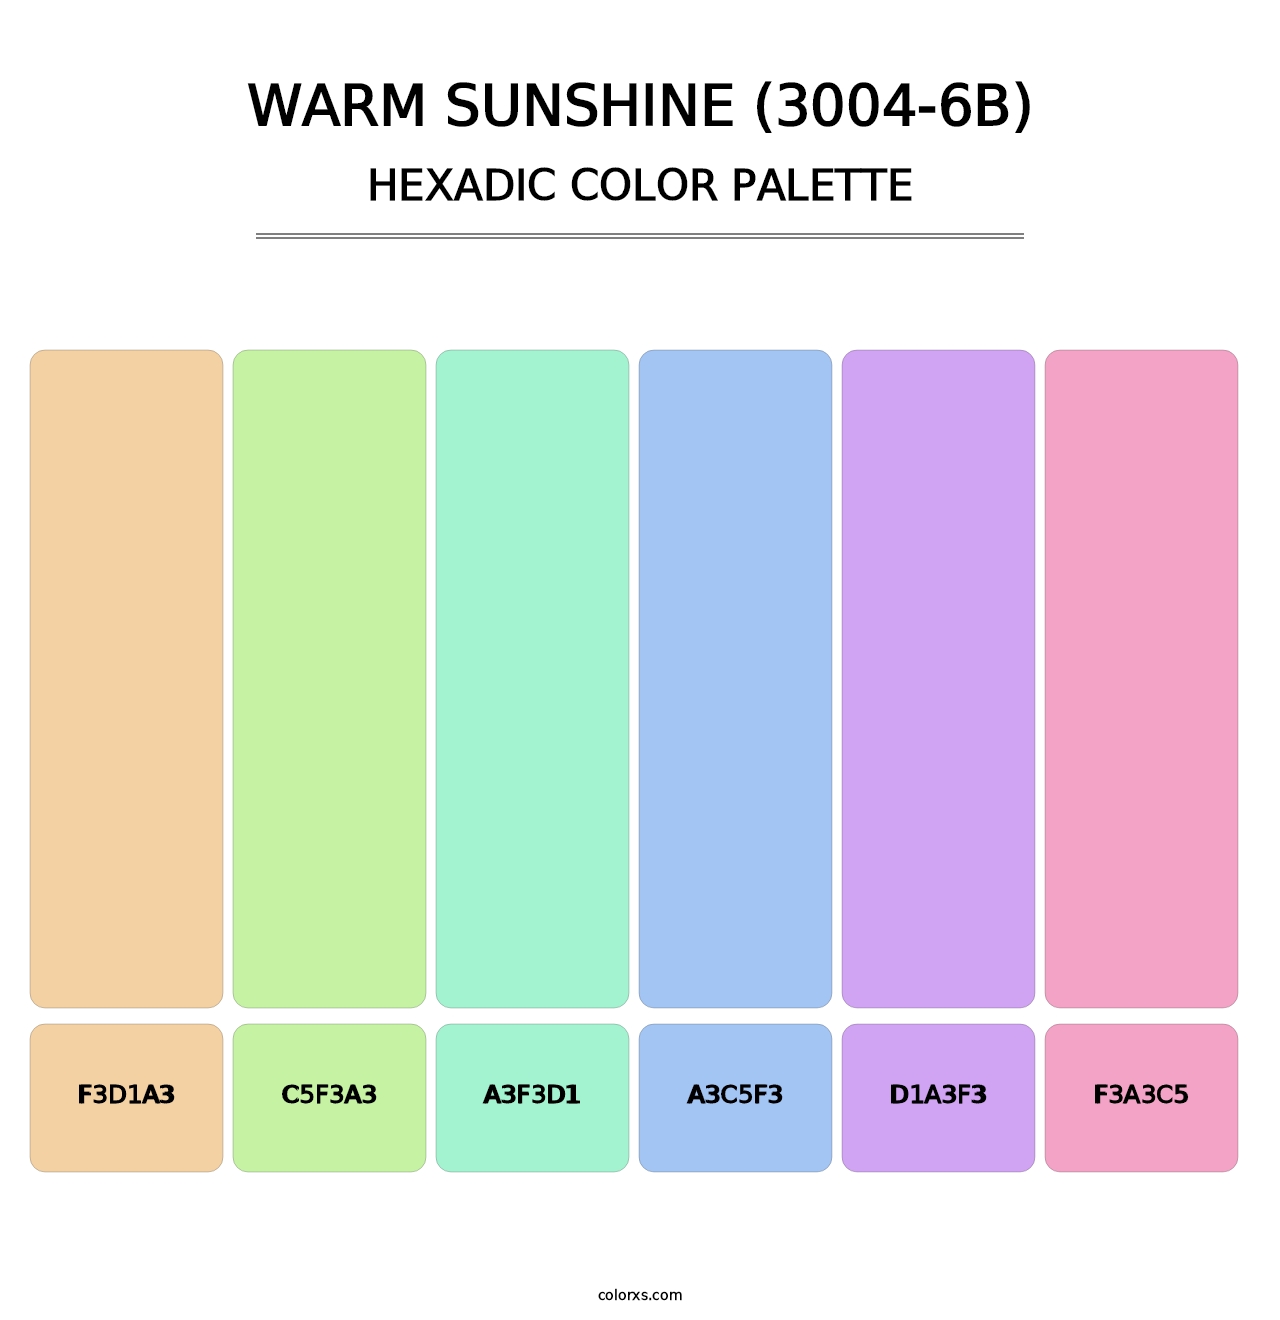 Warm Sunshine (3004-6B) - Hexadic Color Palette